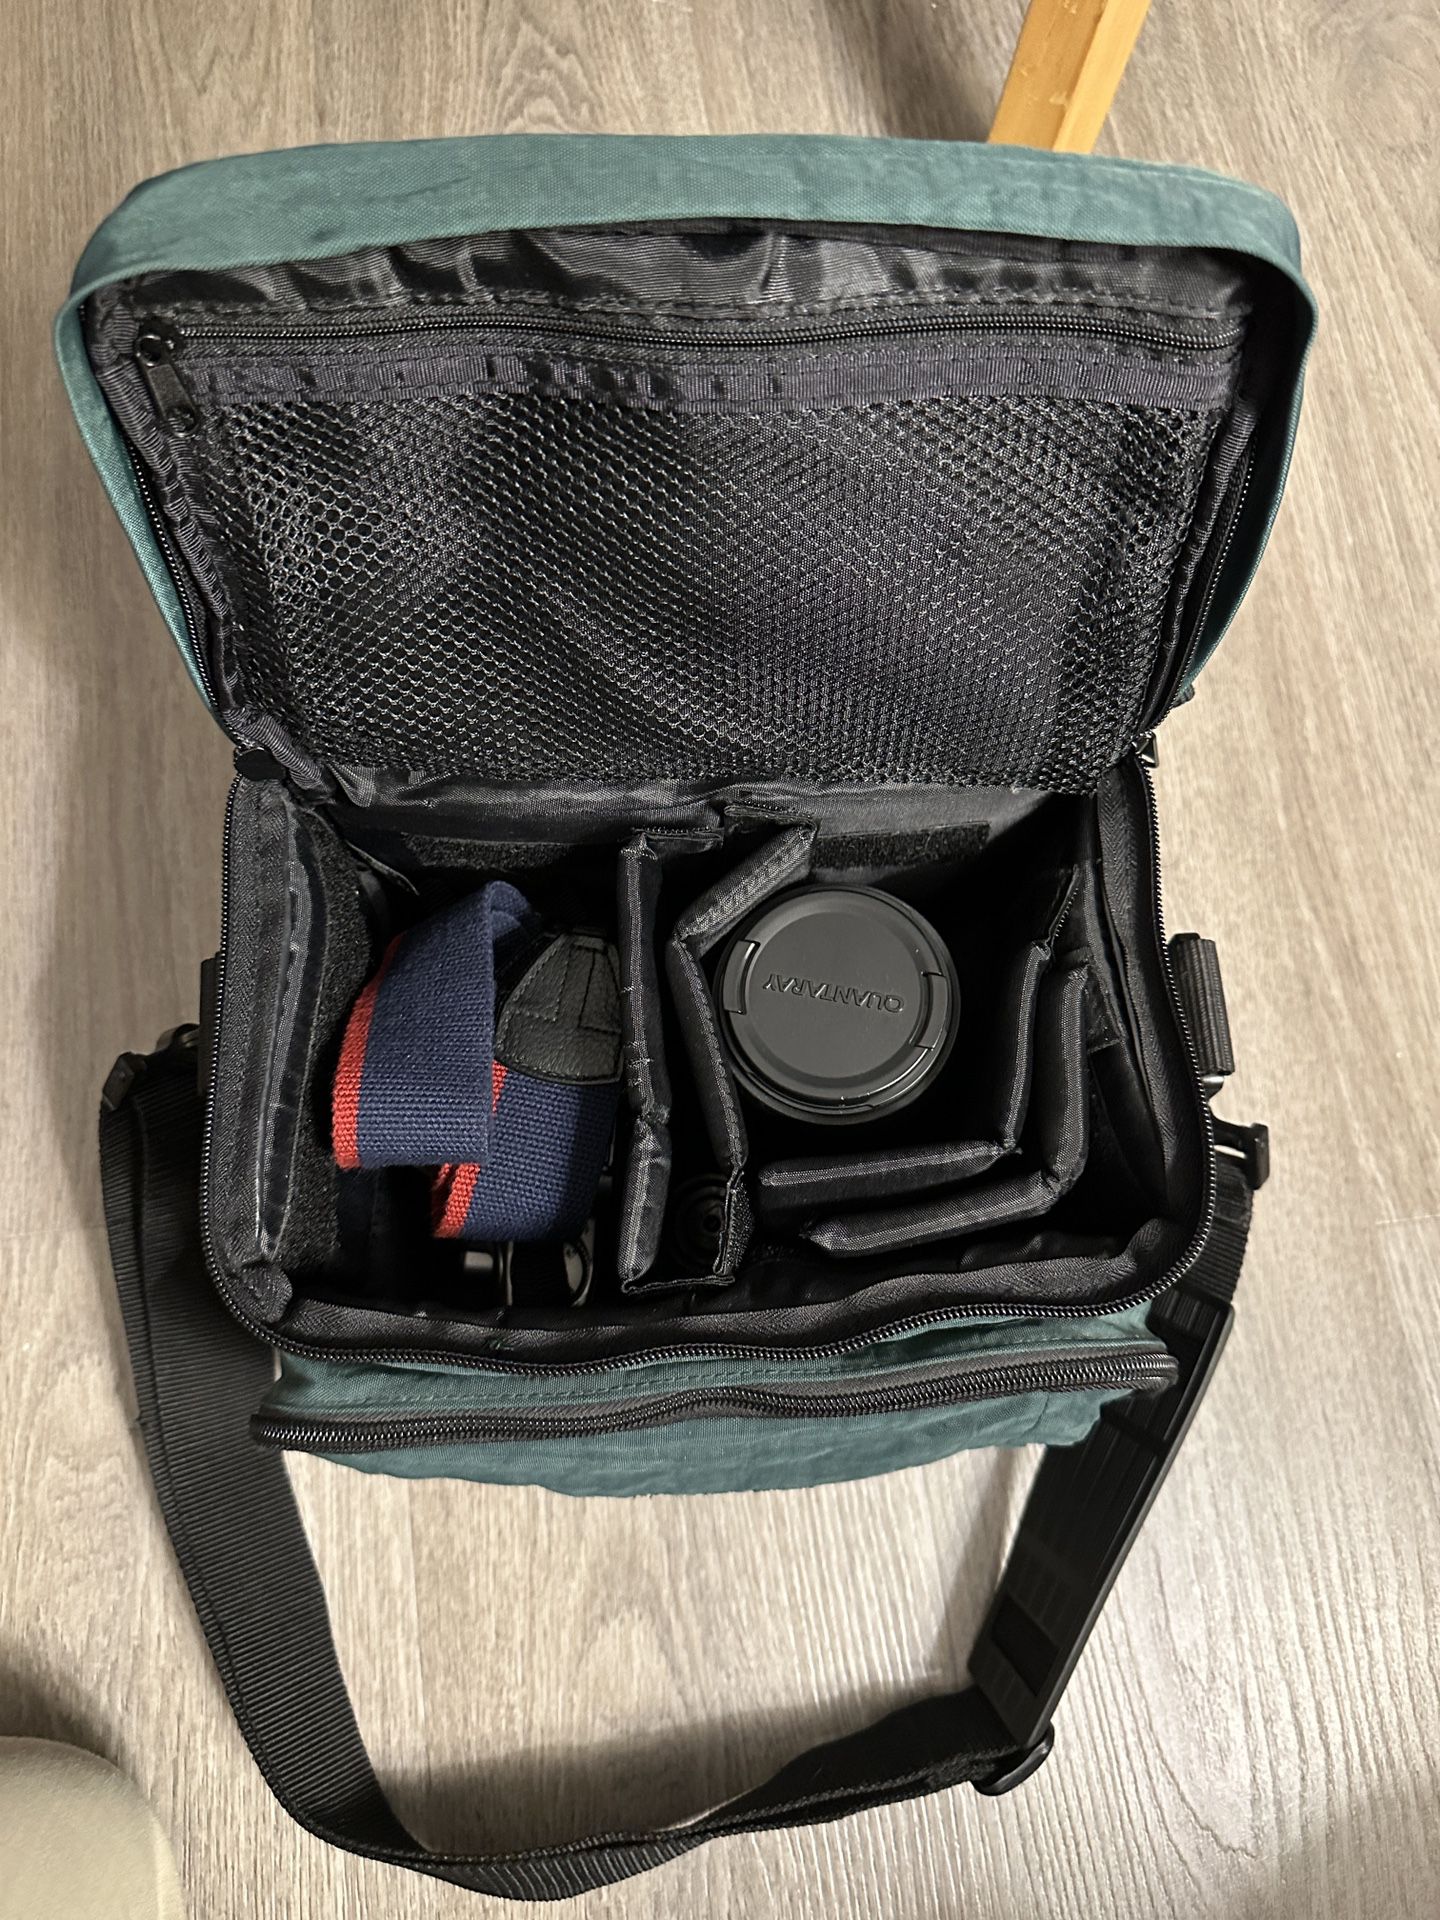 Quantaray Camera Case